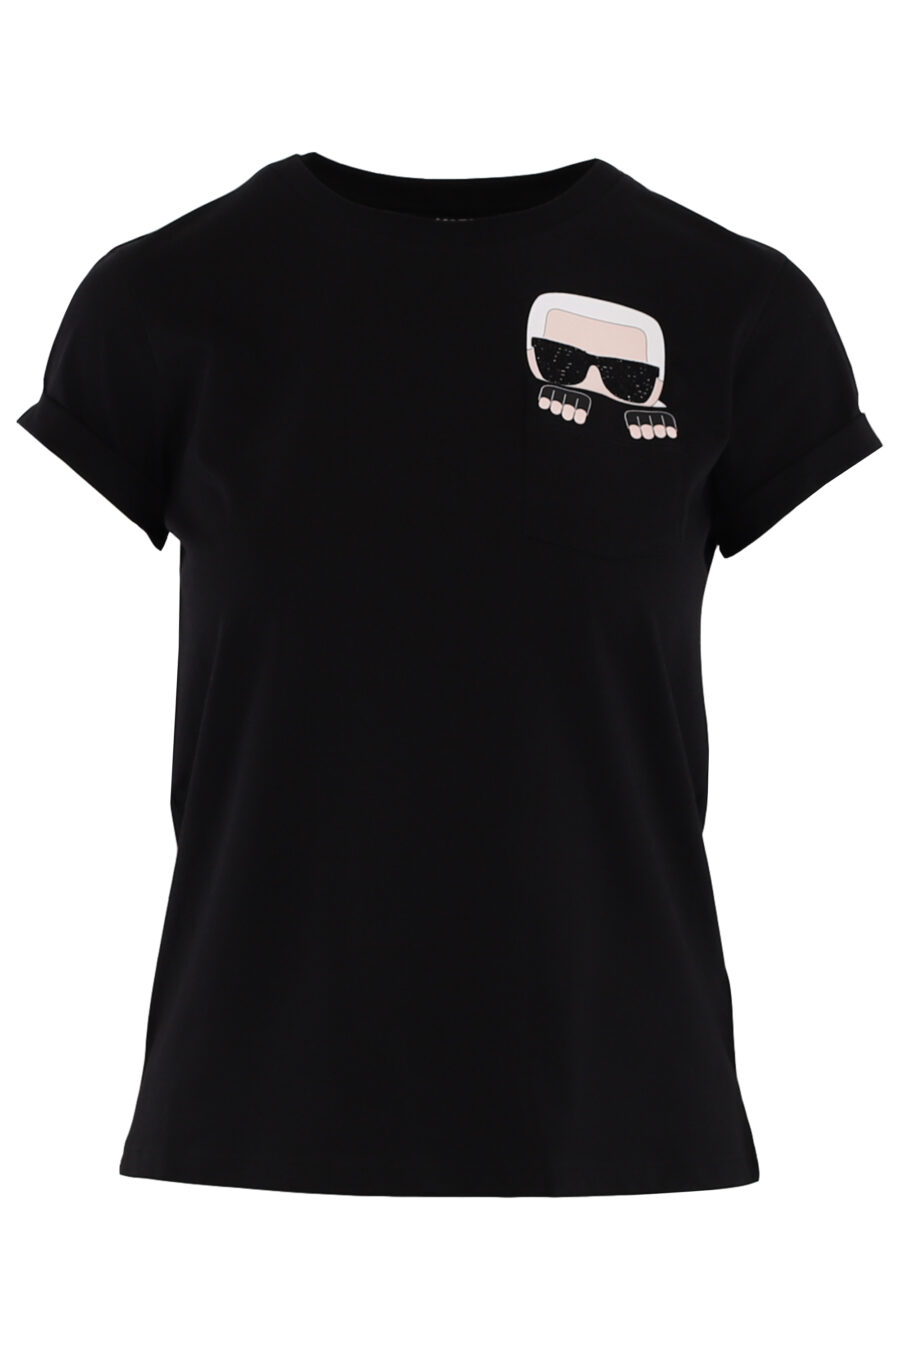 T-shirt preta com bolso com o logótipo "karl" - IMG 0724